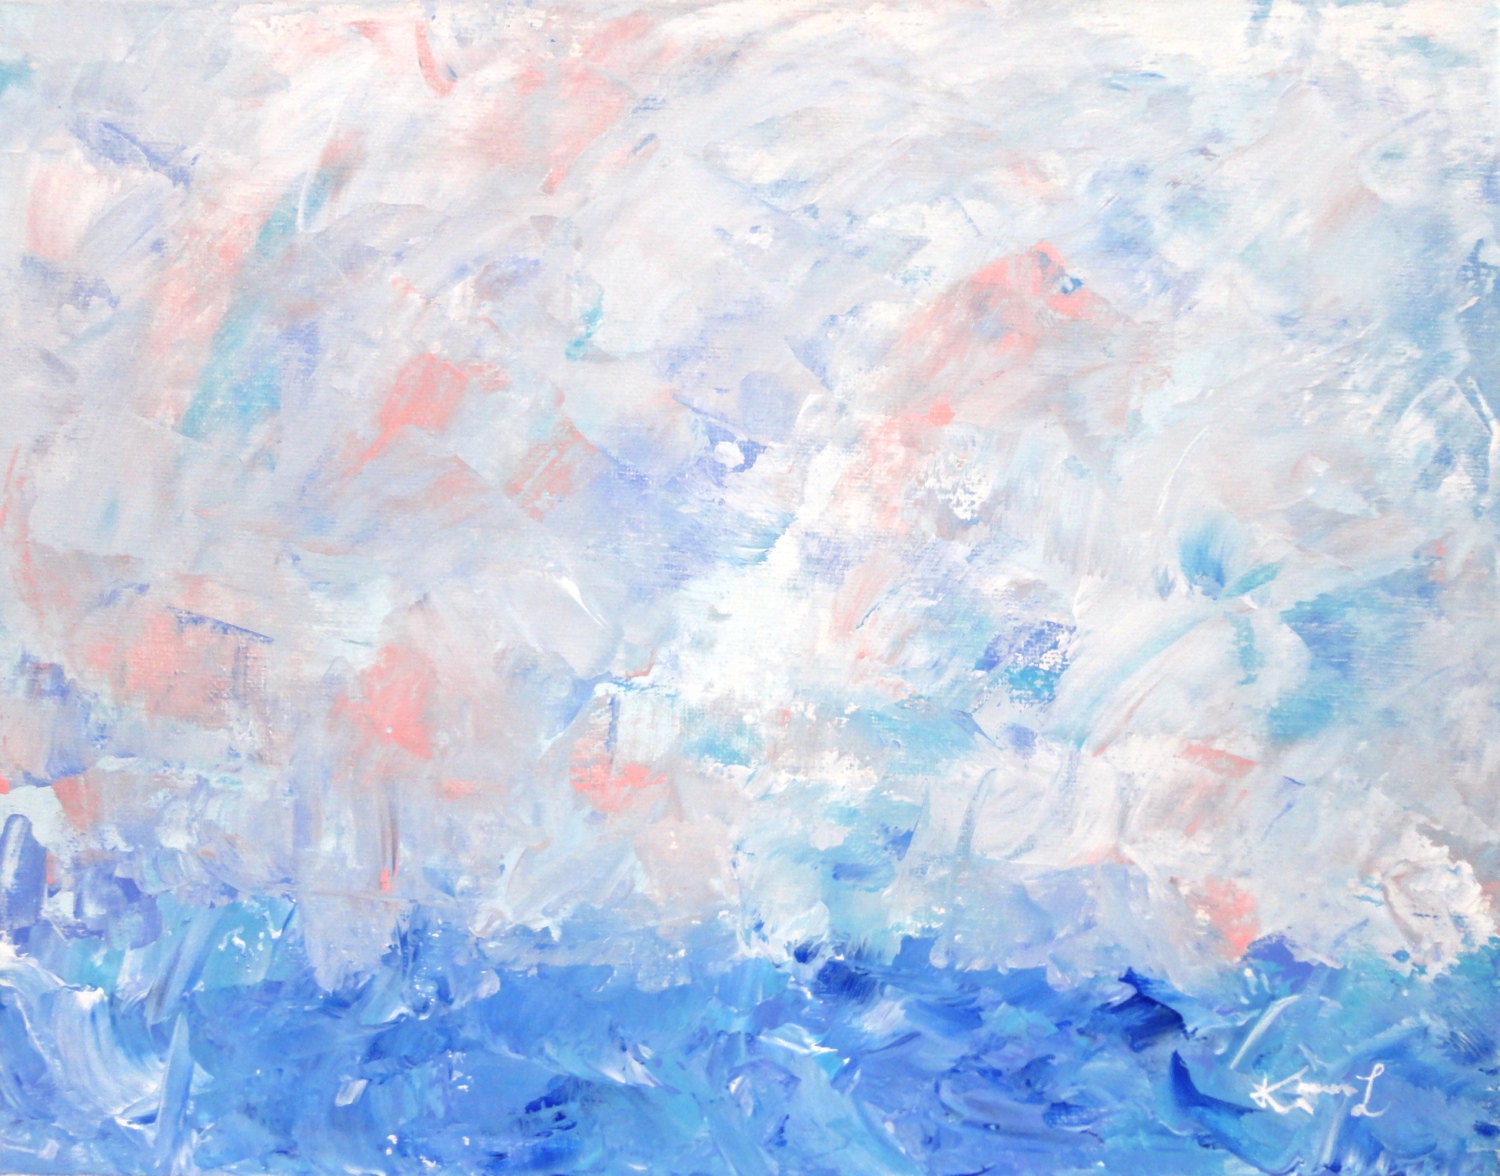 Seascape Original Art Acrylic on Canvas Board Landscape Painting Blue Pink Abstract Artwork - KamaraLarryStudio